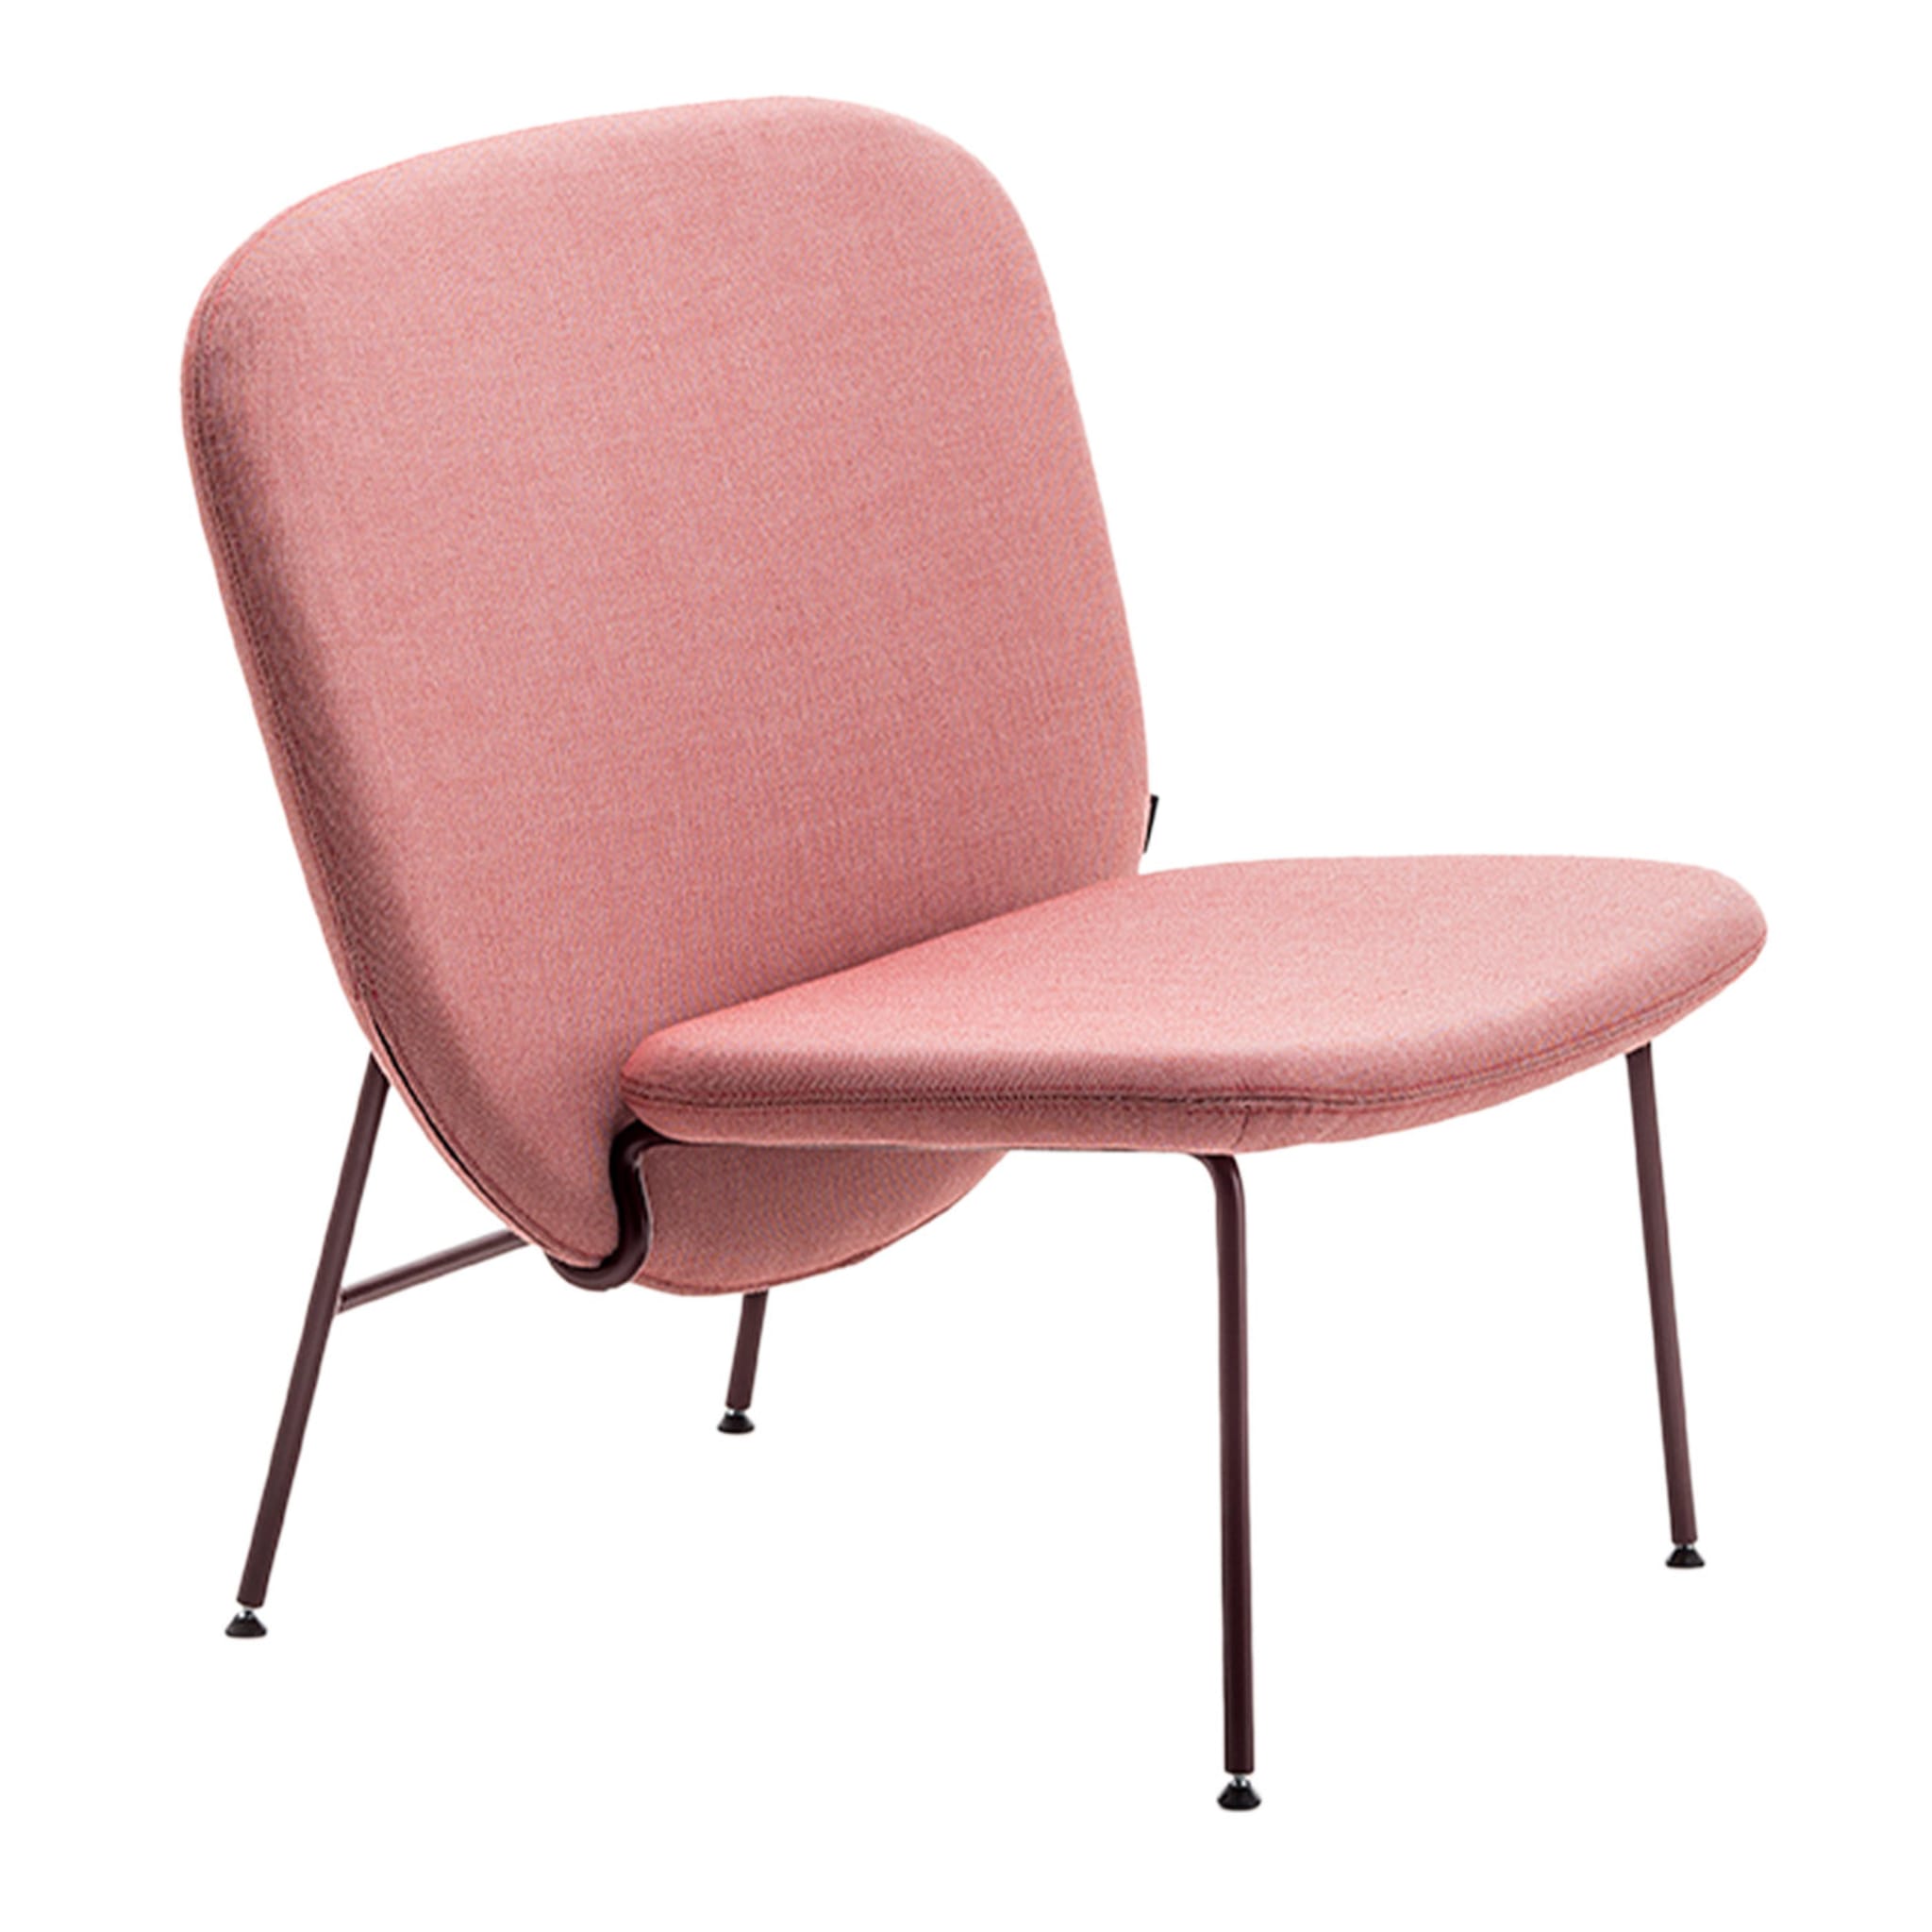 Ala Textured Chair by Sebastian Herkner - Main view